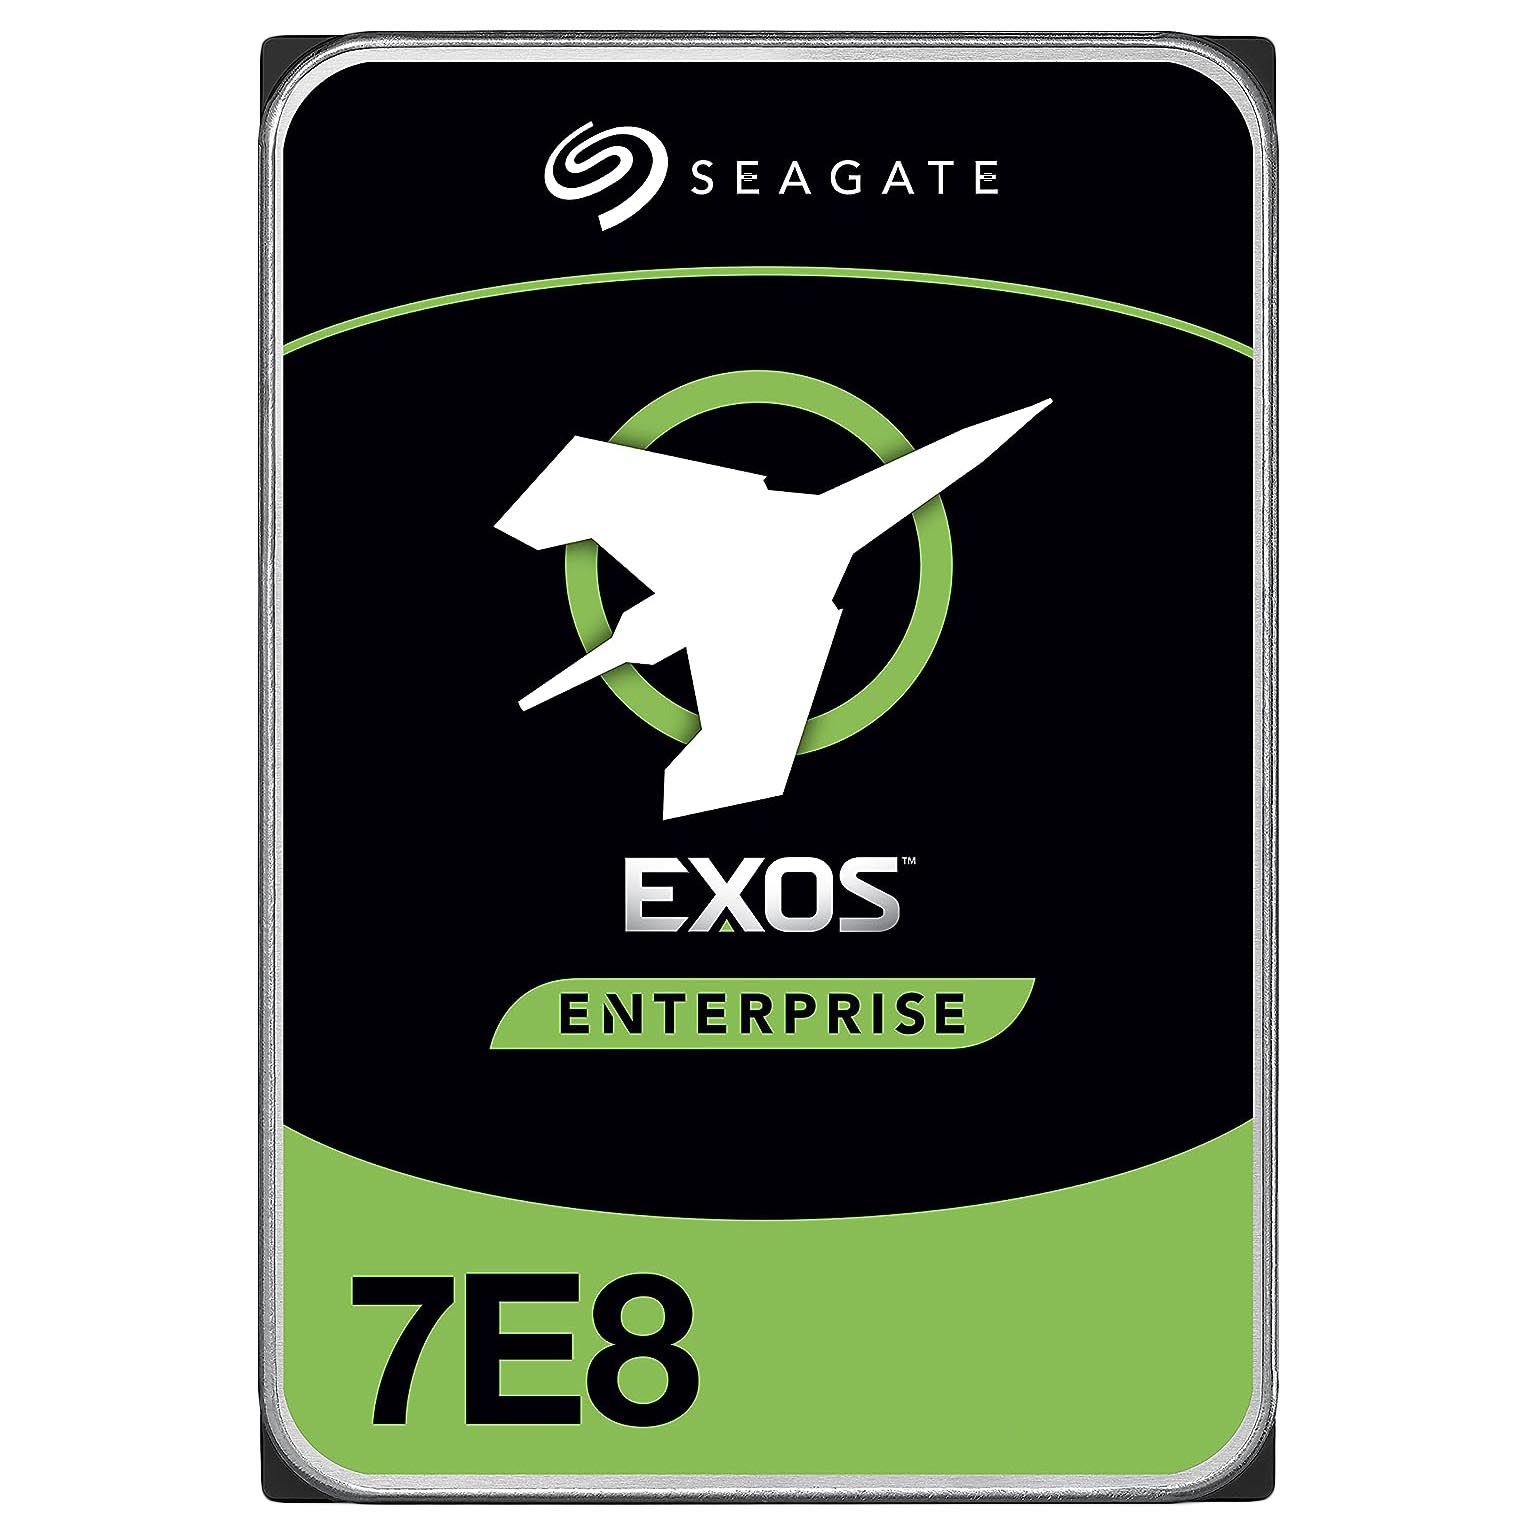 Внутренний жесткий диск Seagate Exos 7E8 512n, ST4000NM0035, 4 Тб внутренний жесткий диск seagate exos 7e8 512e st8000nm0075 8 тб